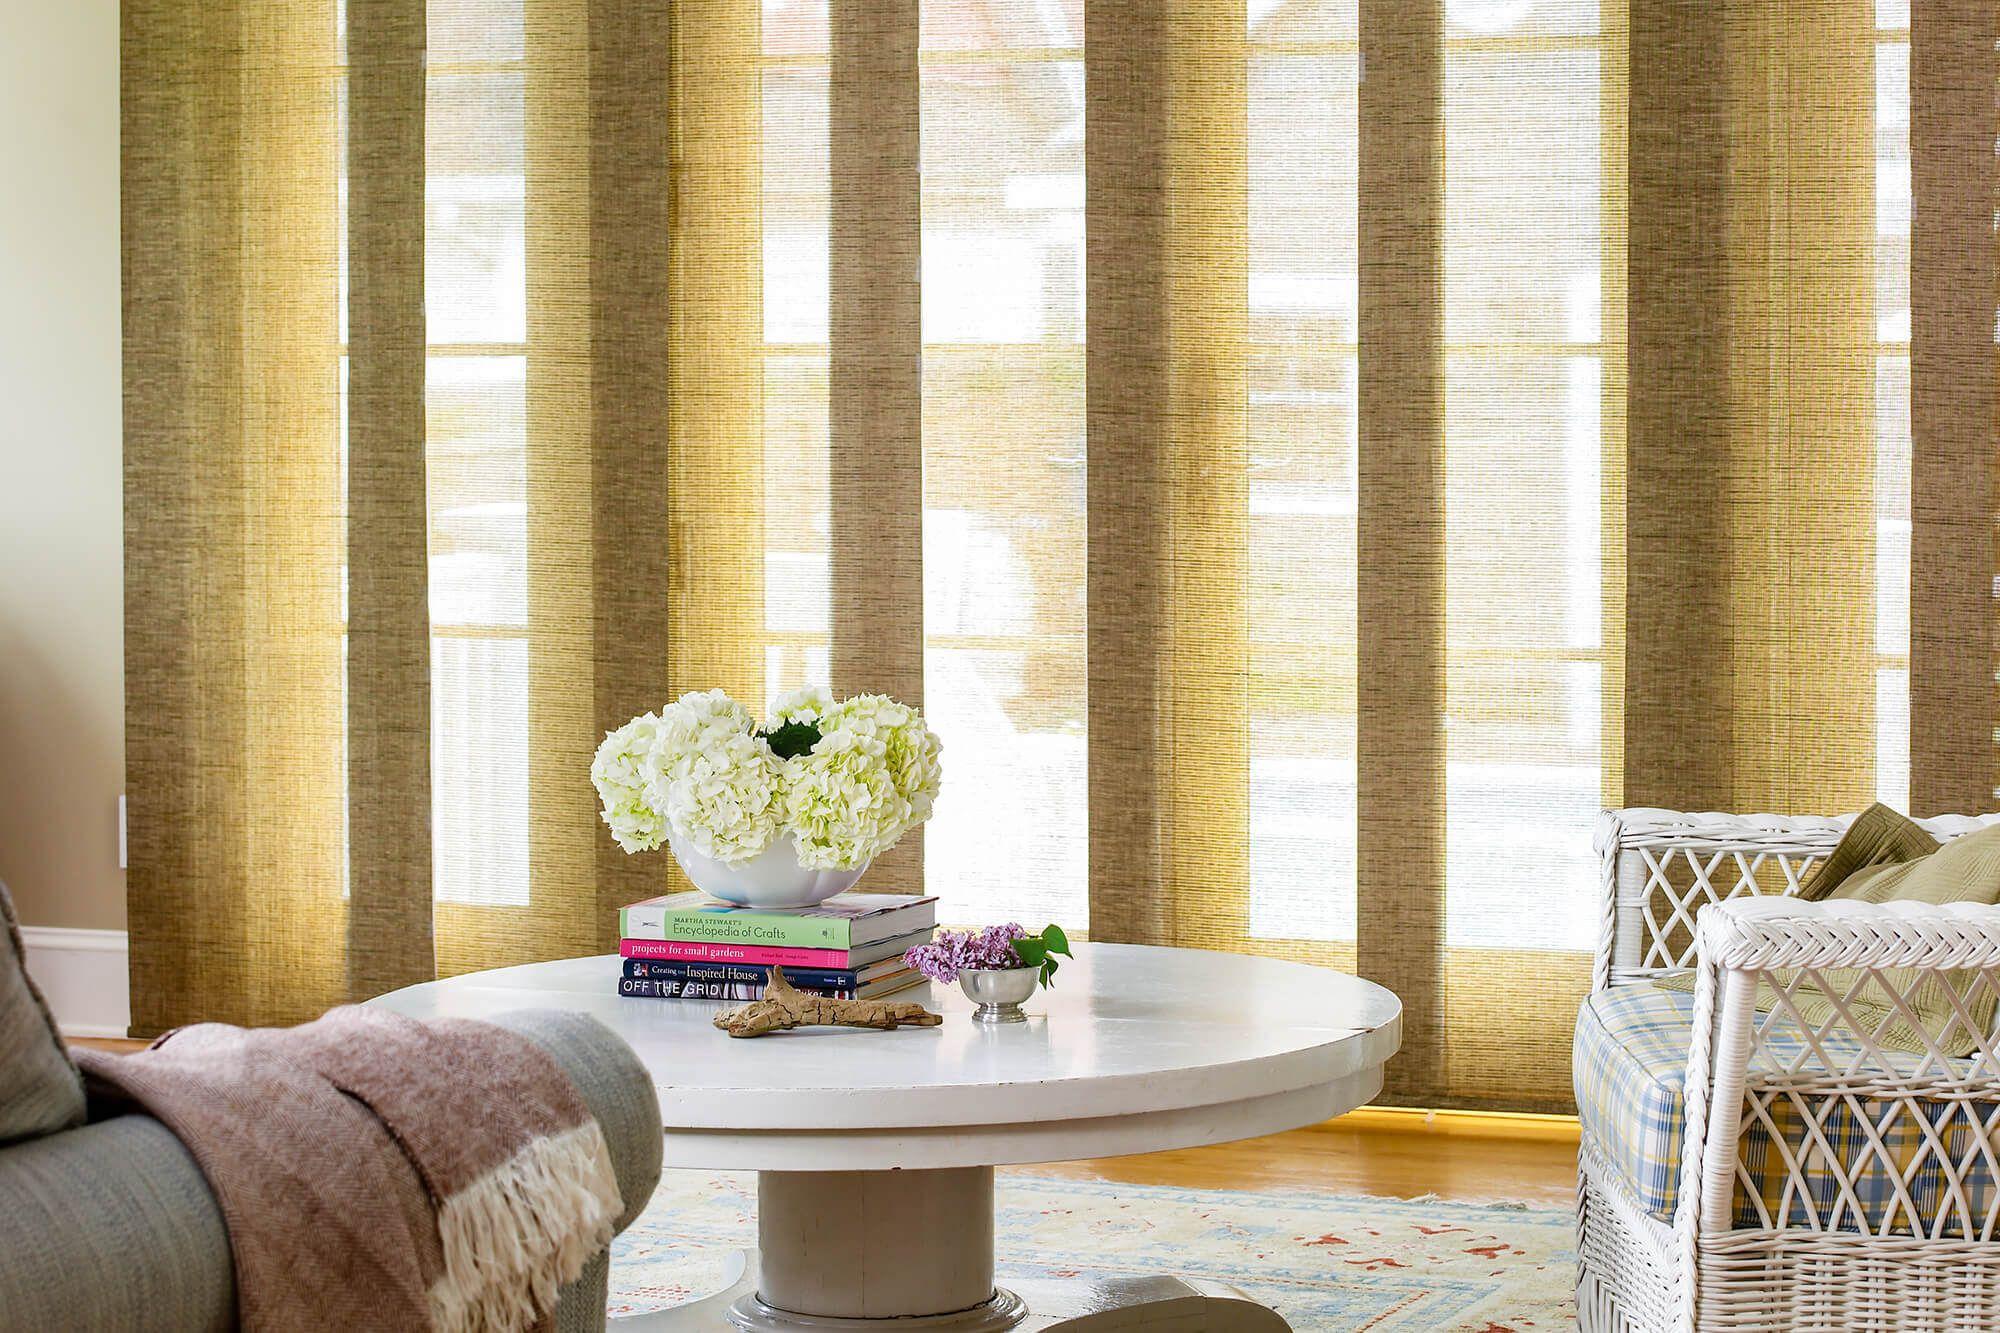 Warm sunlight filters through modern & eco-friendly solar panel tracks in stylish living room.